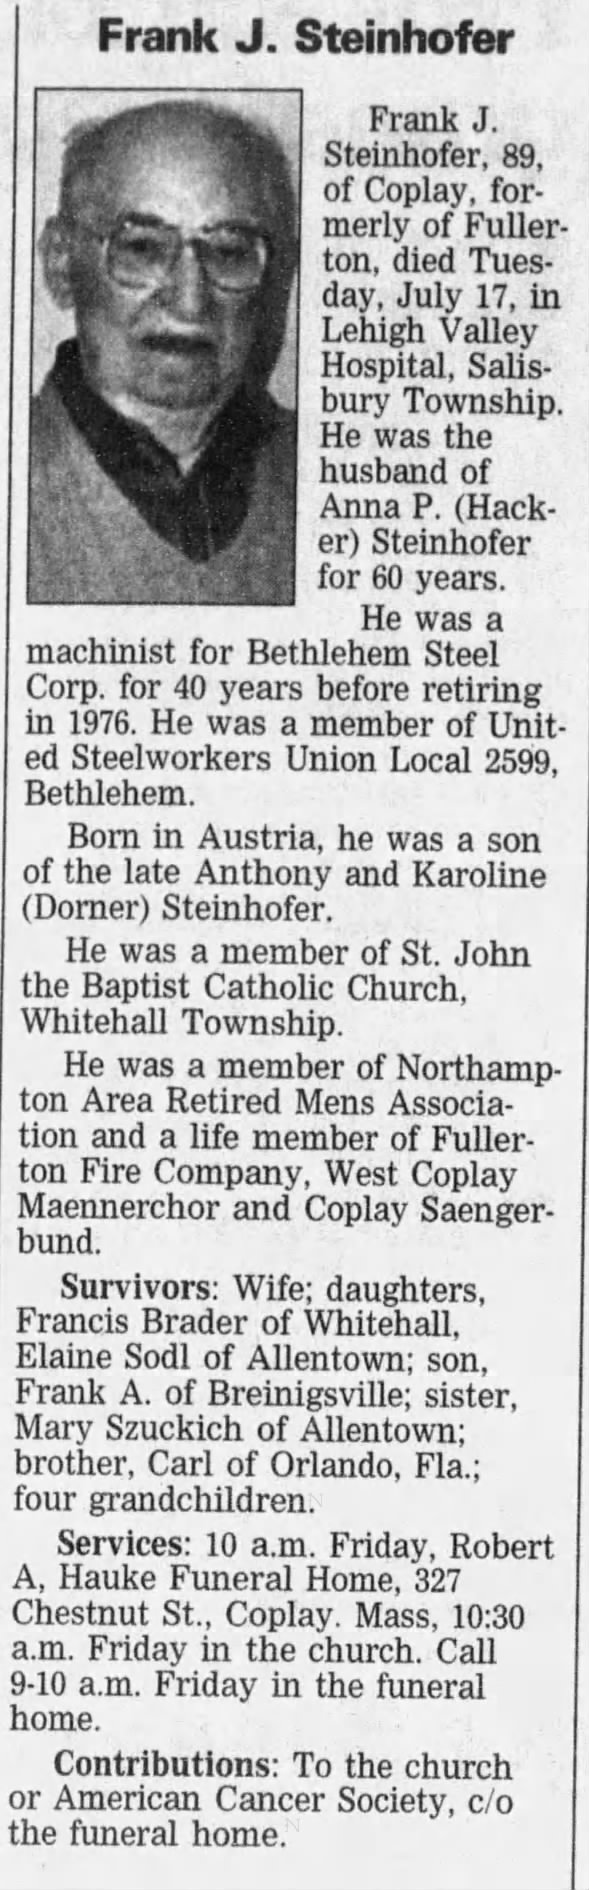 Frank J Steinhofer, 89, of Coplay, Pa, died July 17, 2001, in Lehigh Valley Hosp., Salisbury, Pa